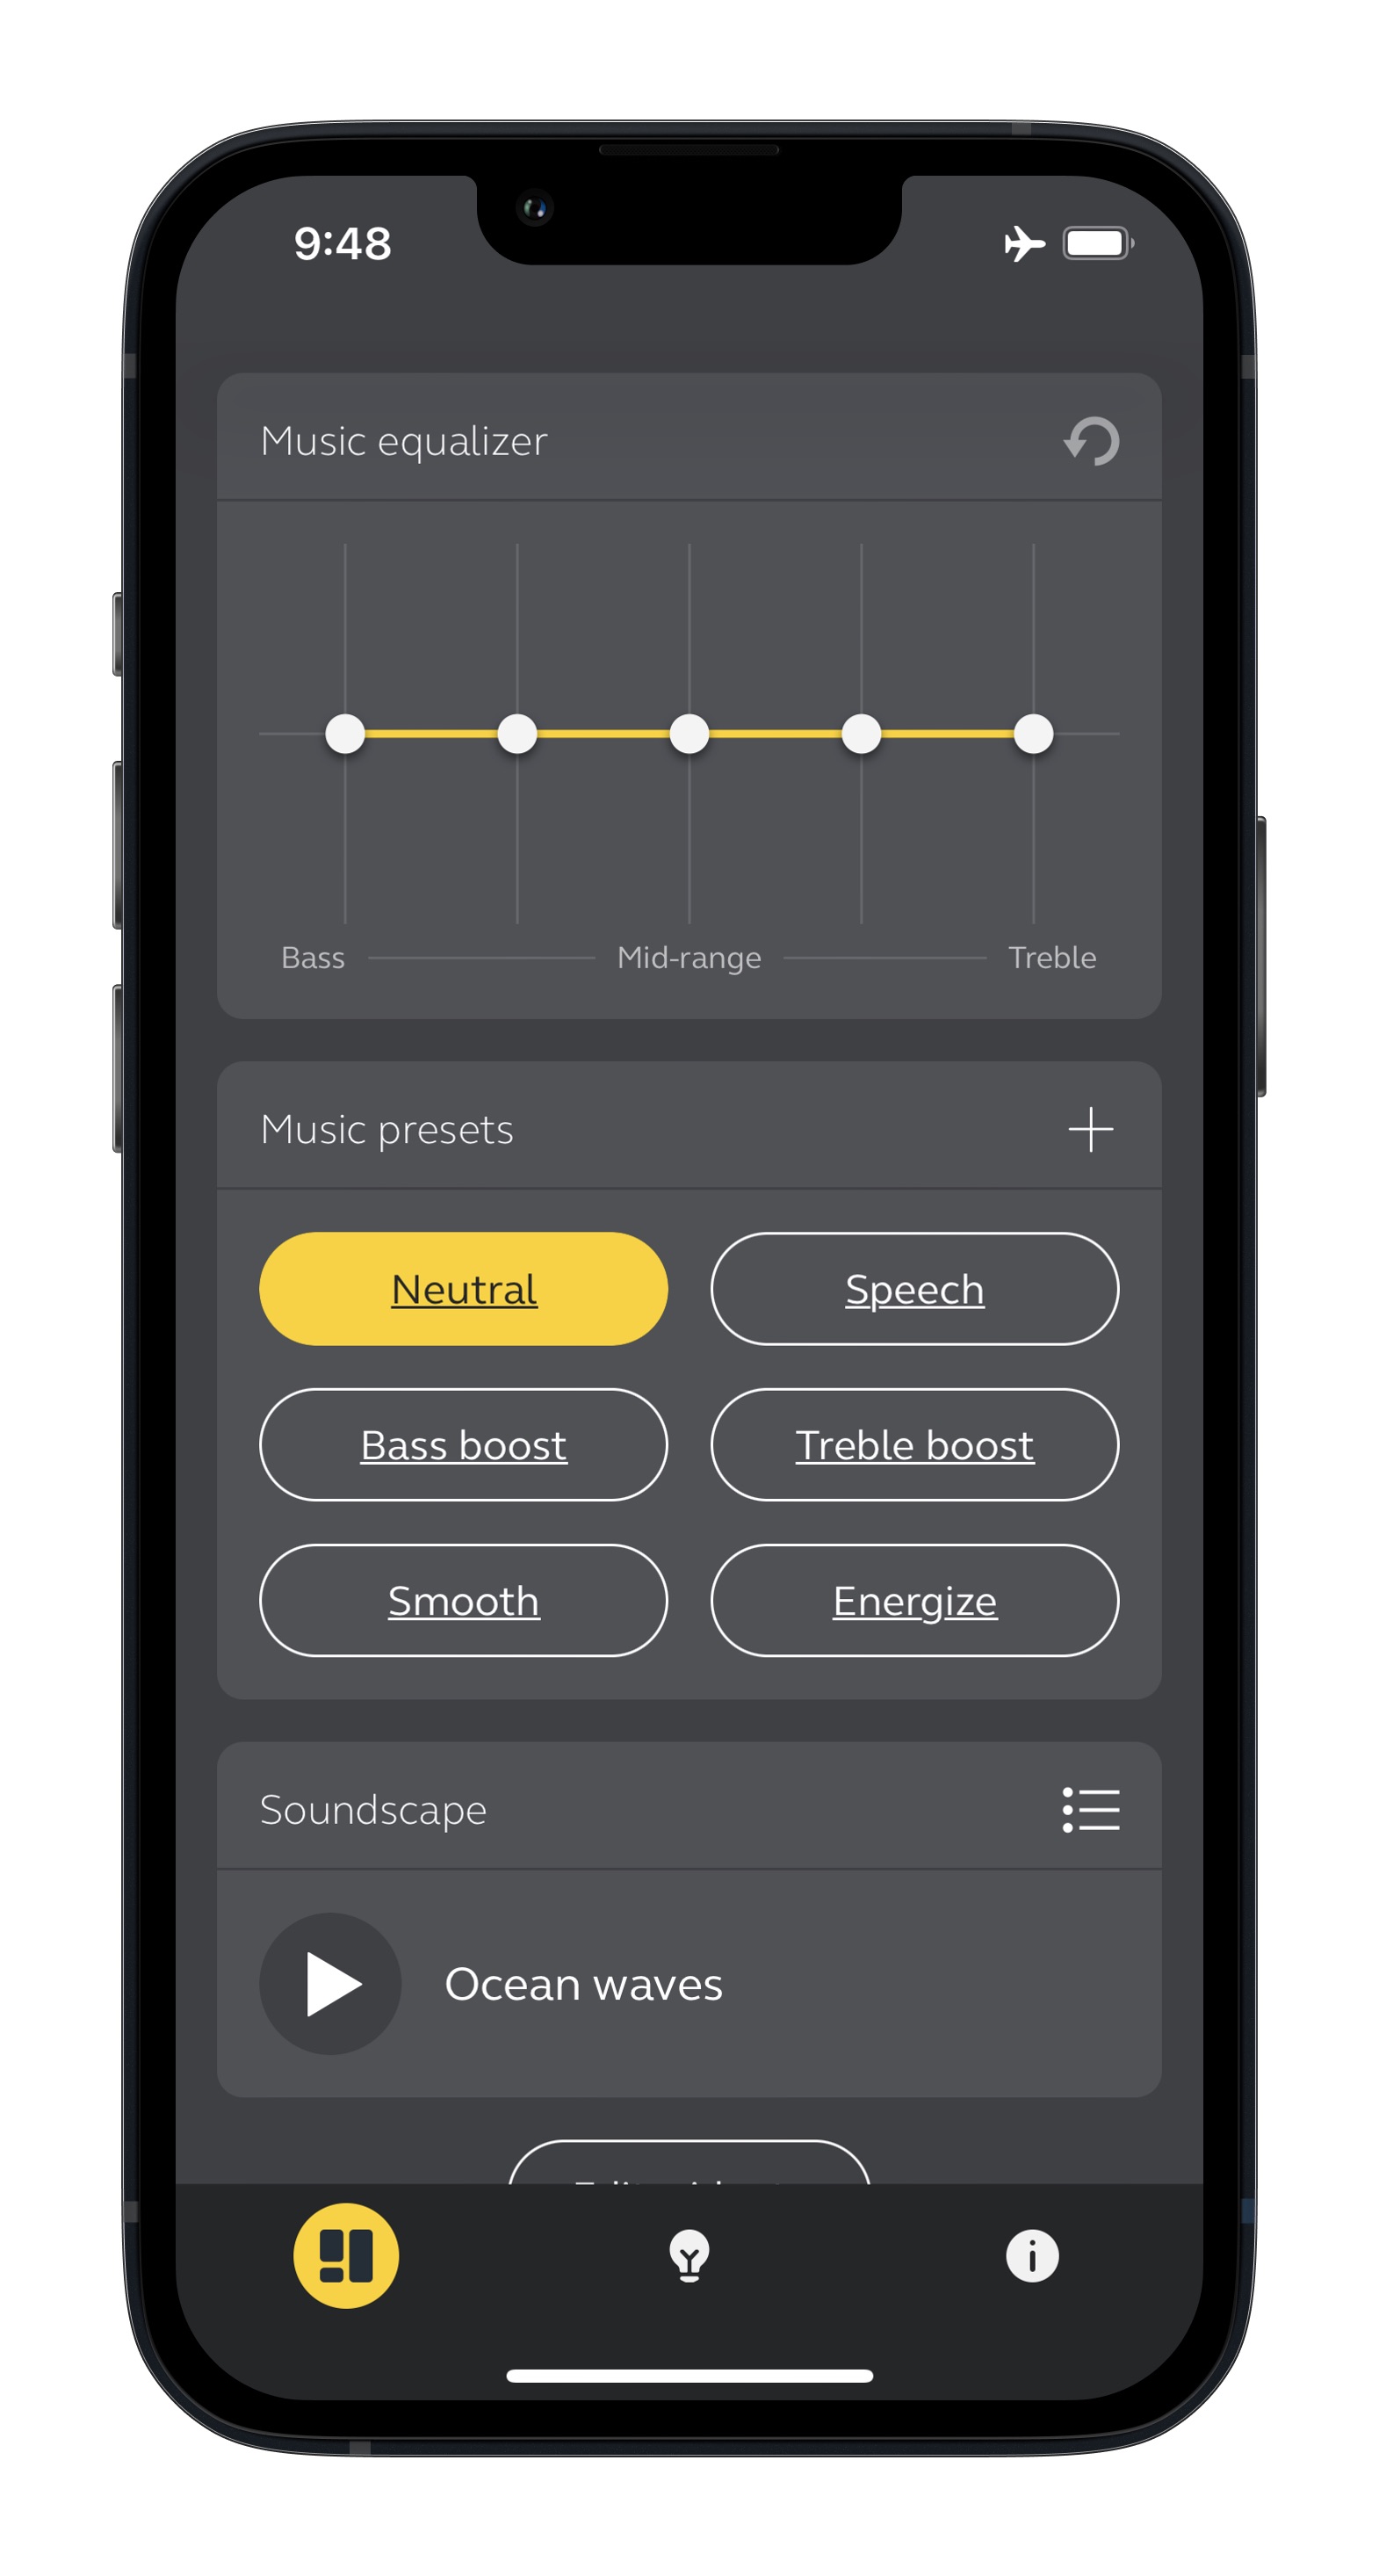 Jabra Sound+ app for iOS equalizer settings.